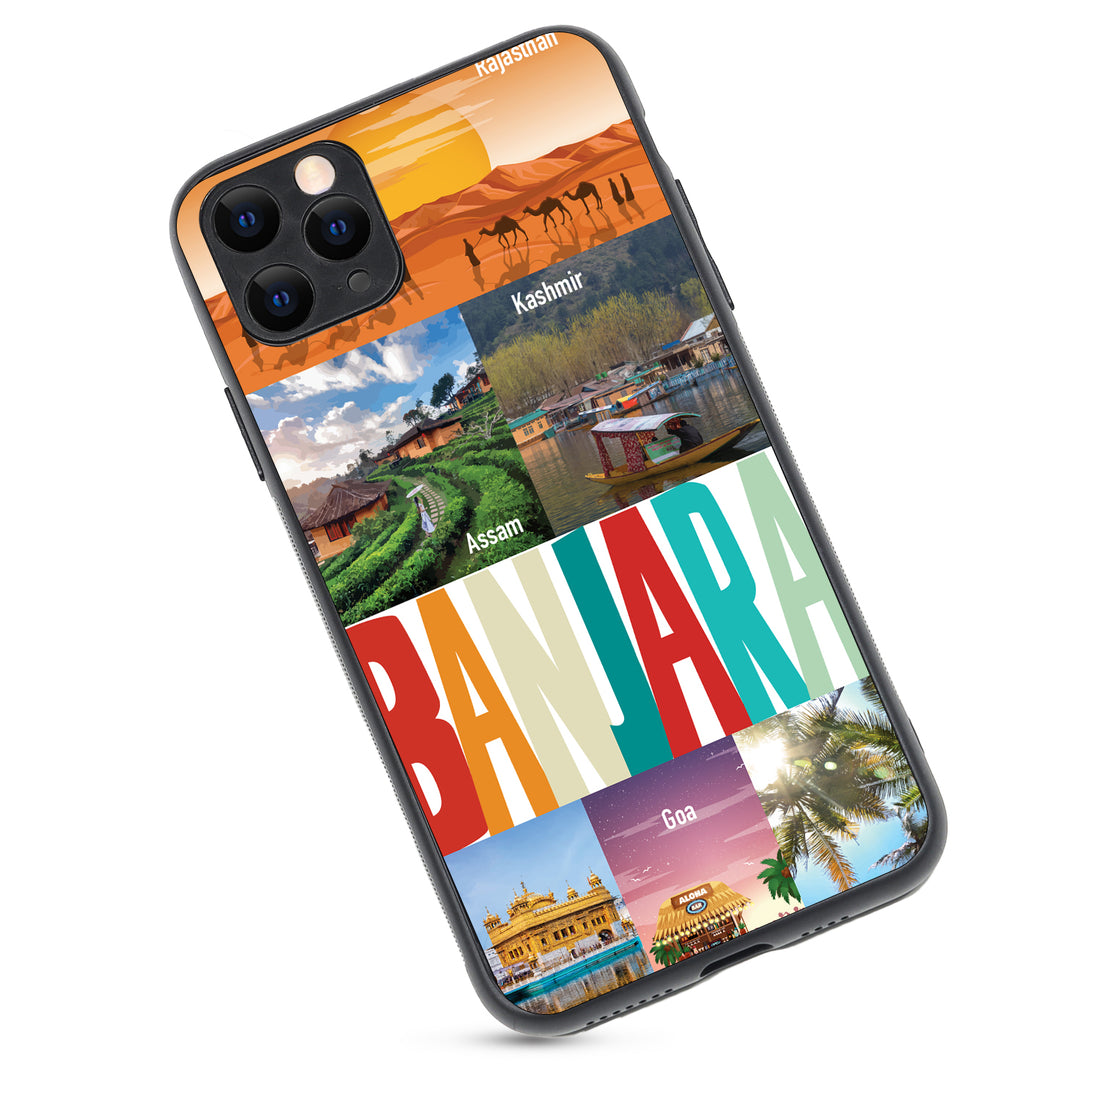 Banjara Travel iPhone 11 Pro Max Case